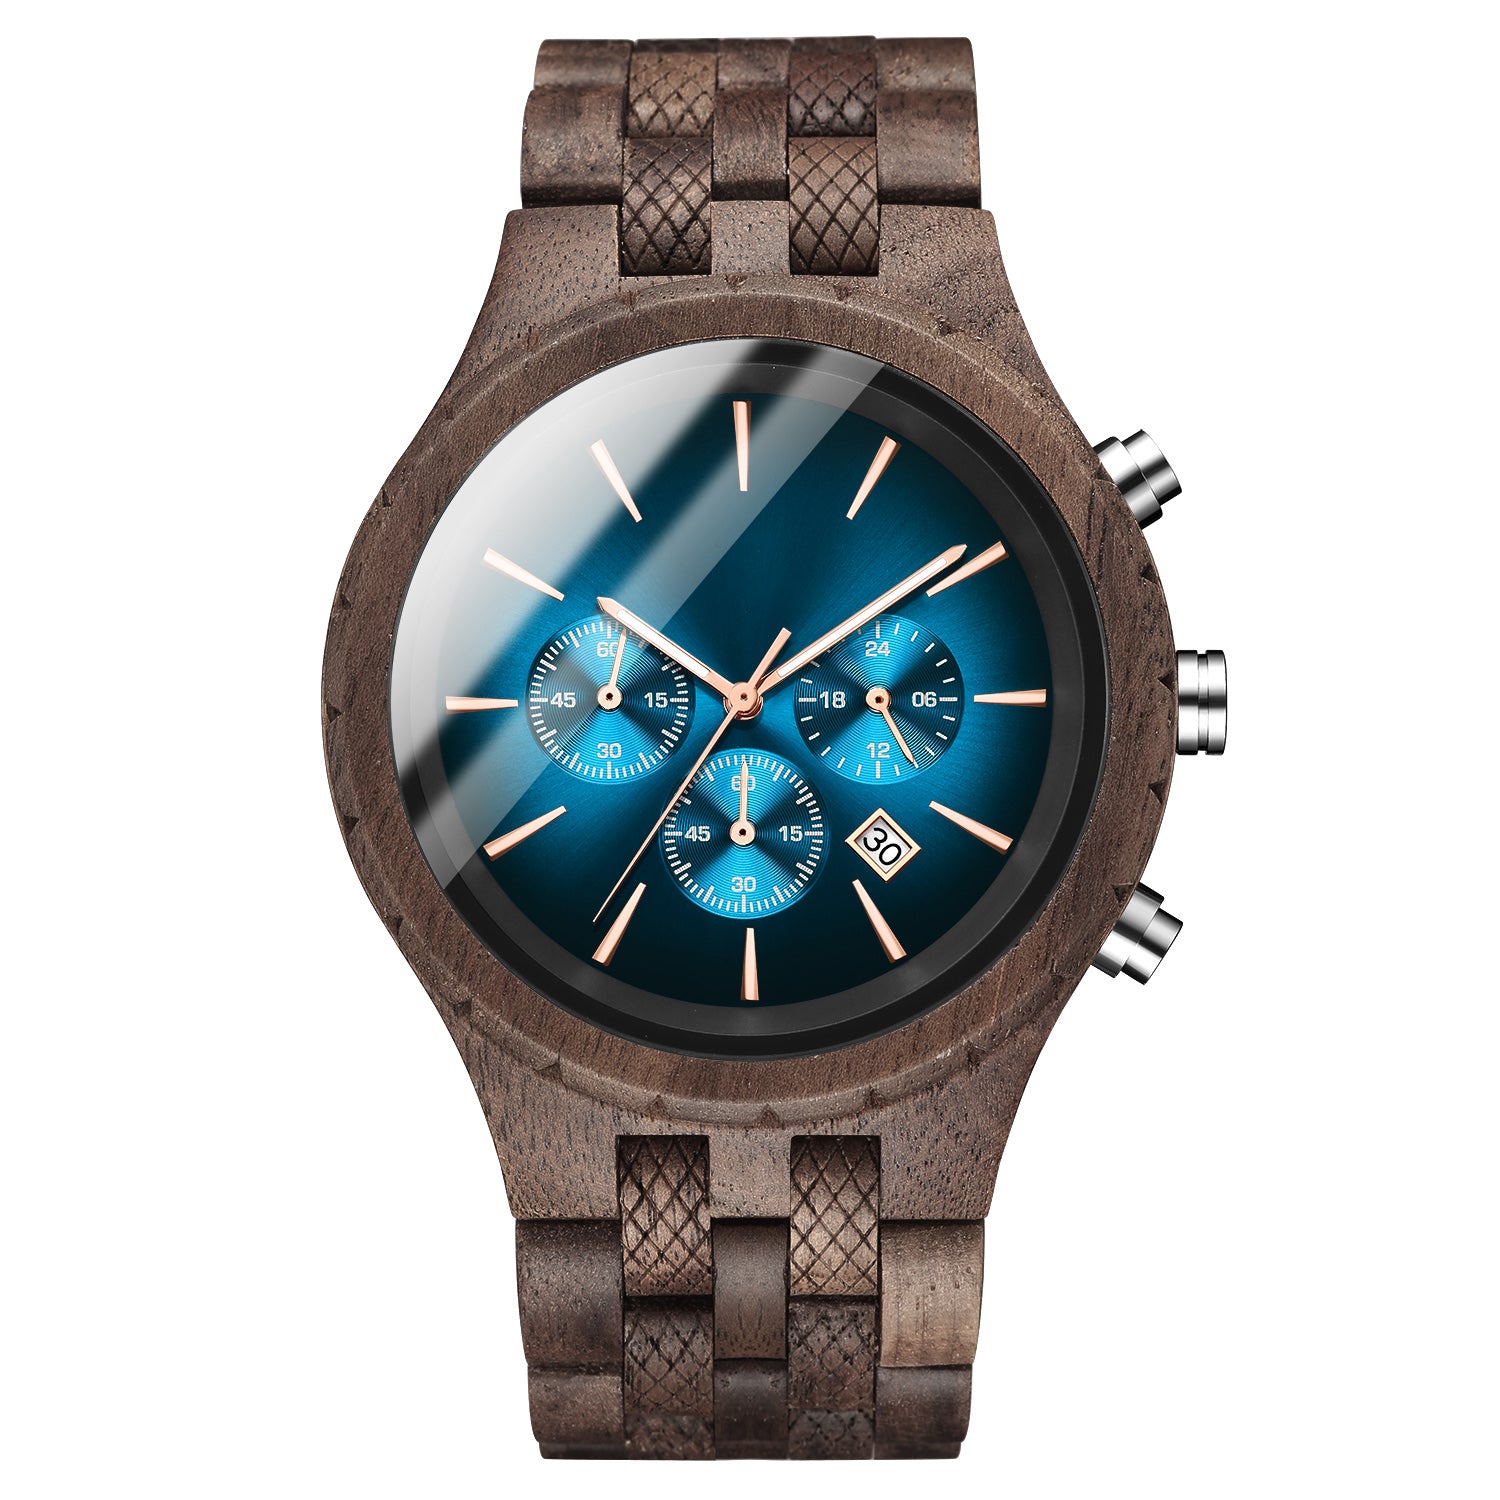 Neptune Carbon Fiber Watch. Red Dial. 40mm. AQ-23009-01 – AquatridentWatch